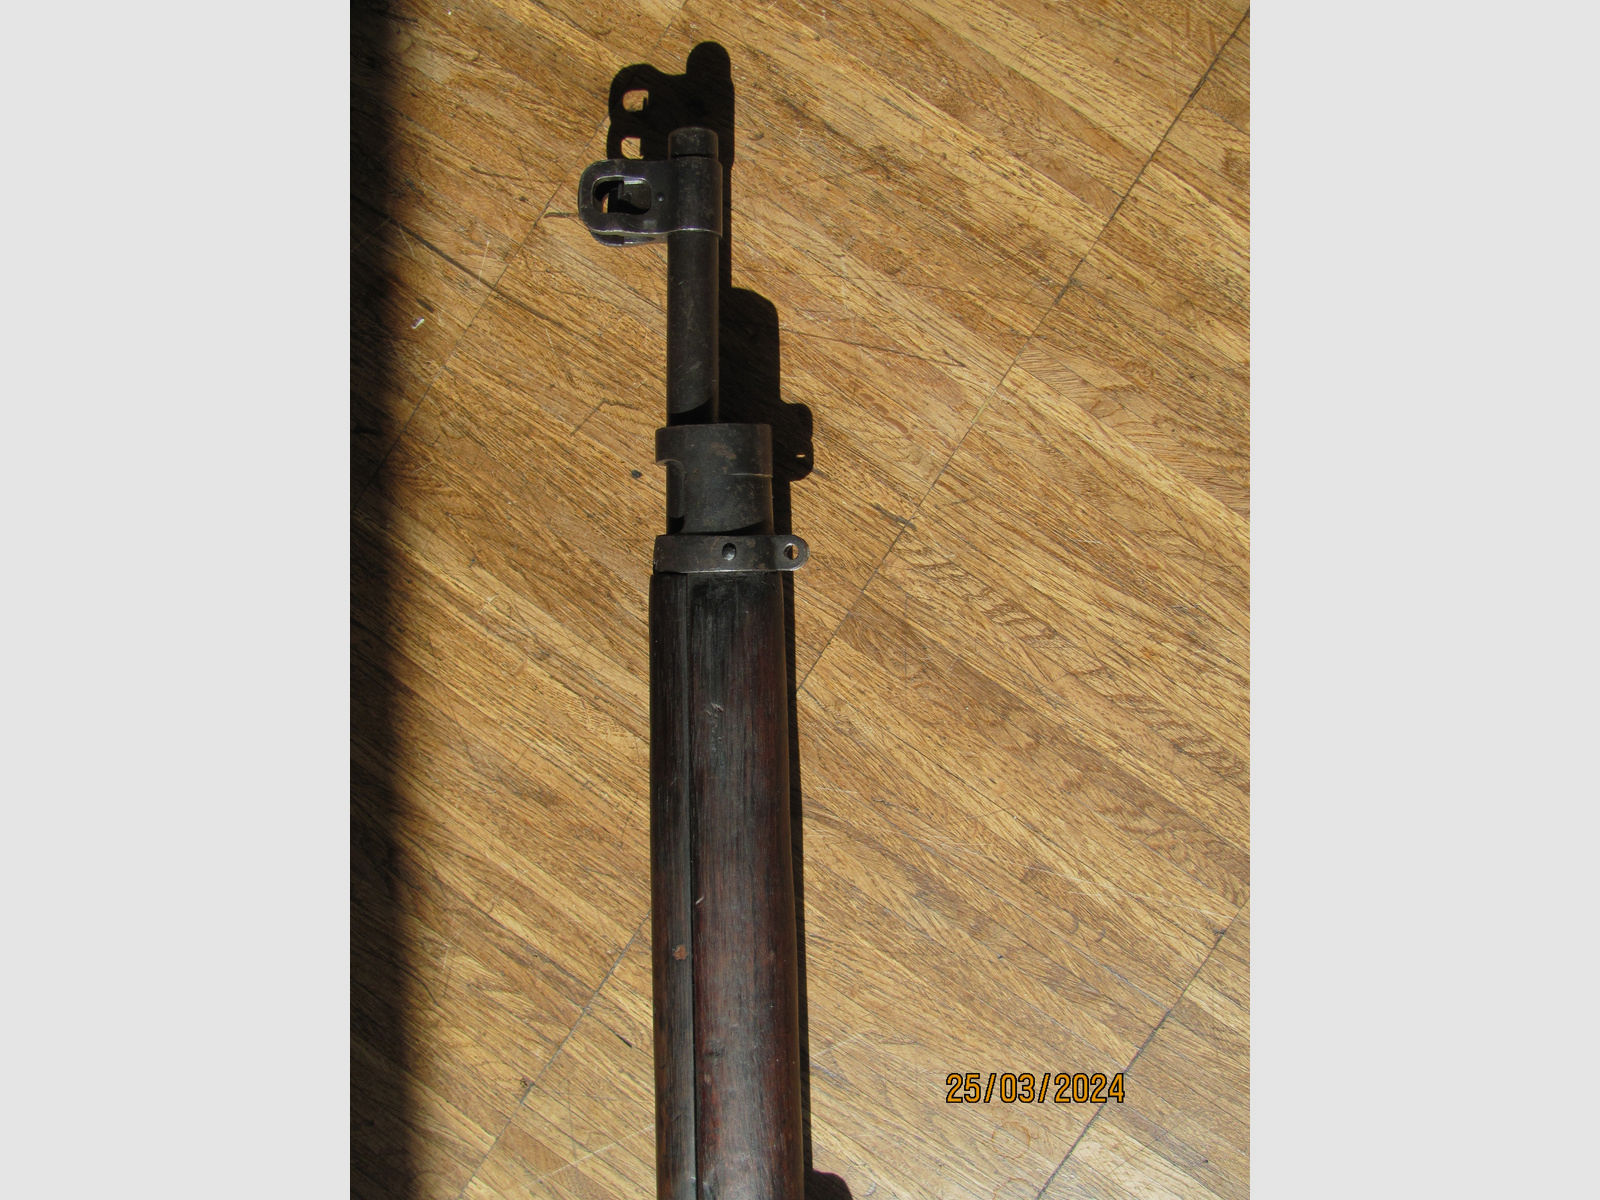 Seltene Enfield P14 Mark 1*  Remington .303 british -- gestempelt RE * ProdNr 9378x --  guter Gesamtzustand -- 975,- VHB